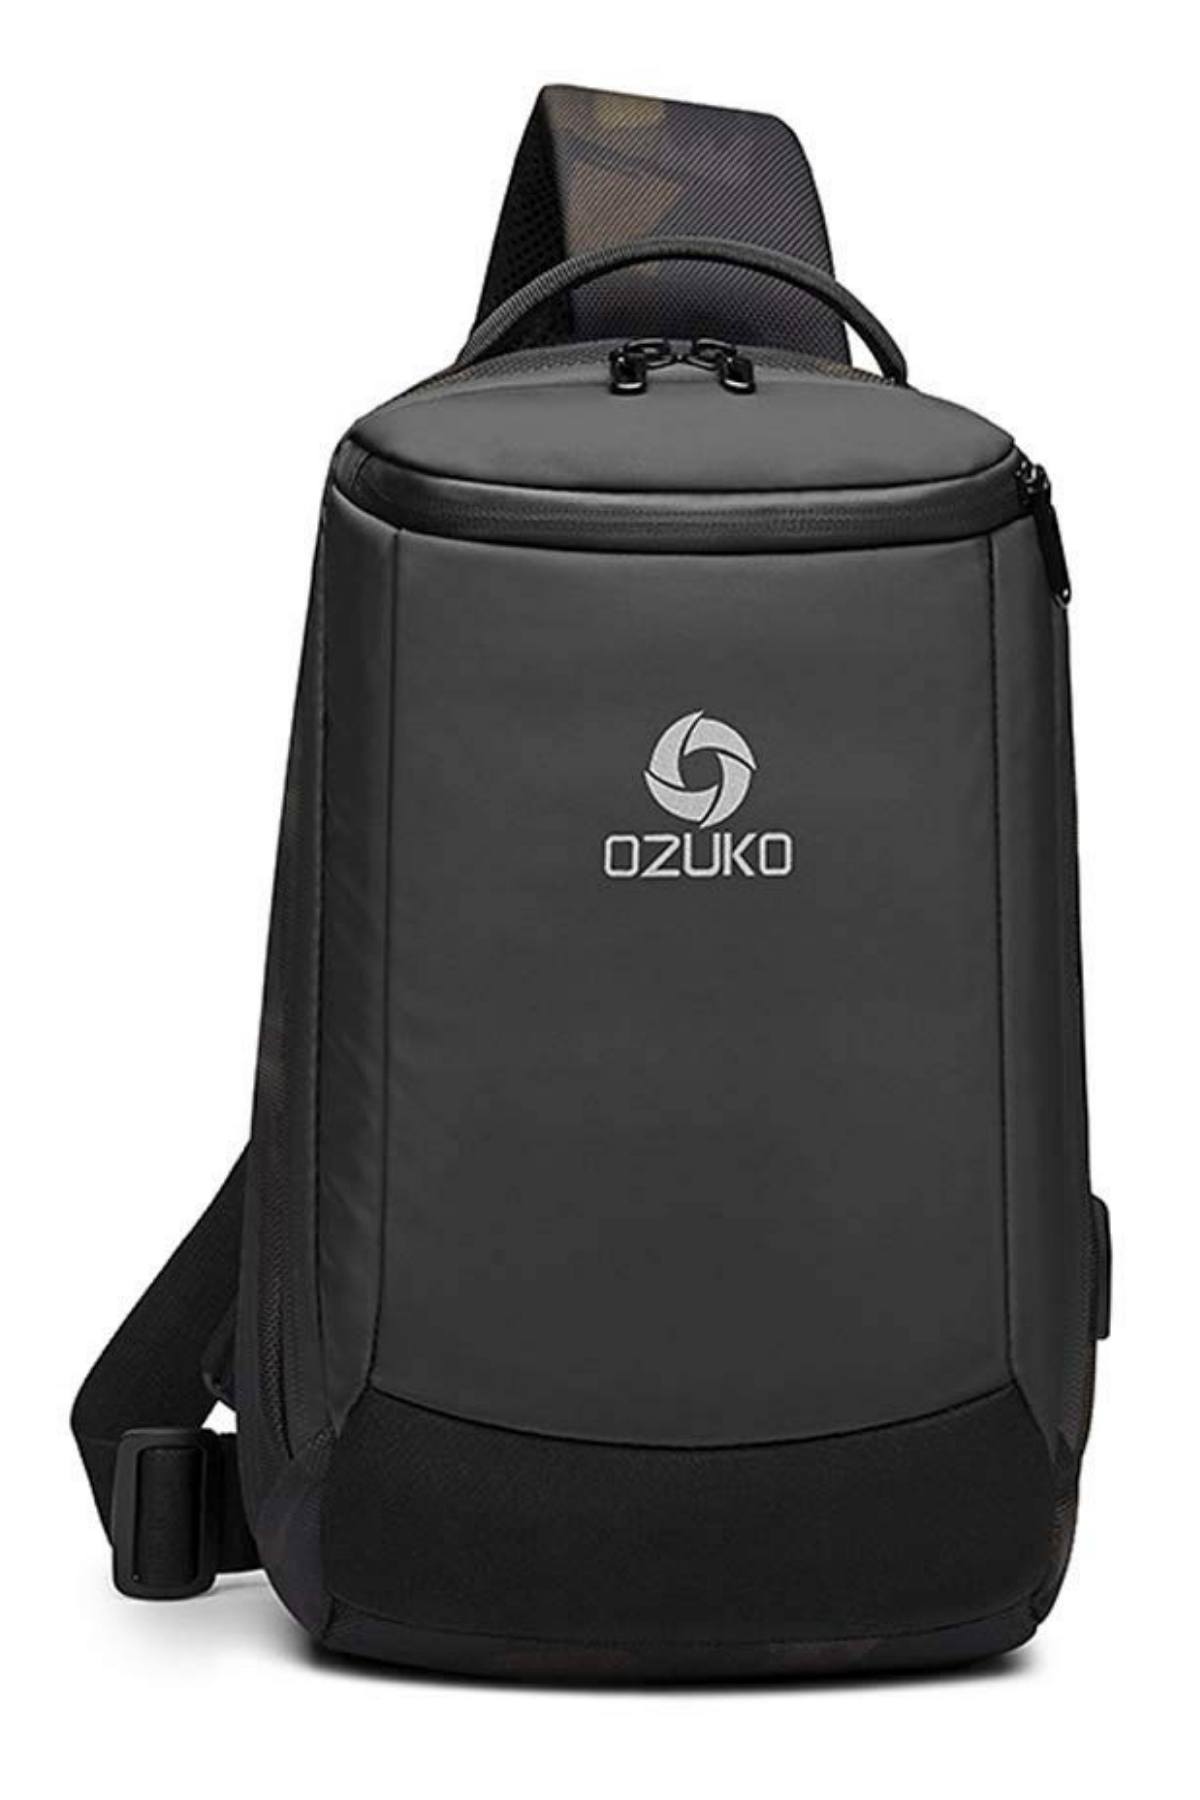 Ozuko Camo Waterproof Crossbody Single Shoulder Bag